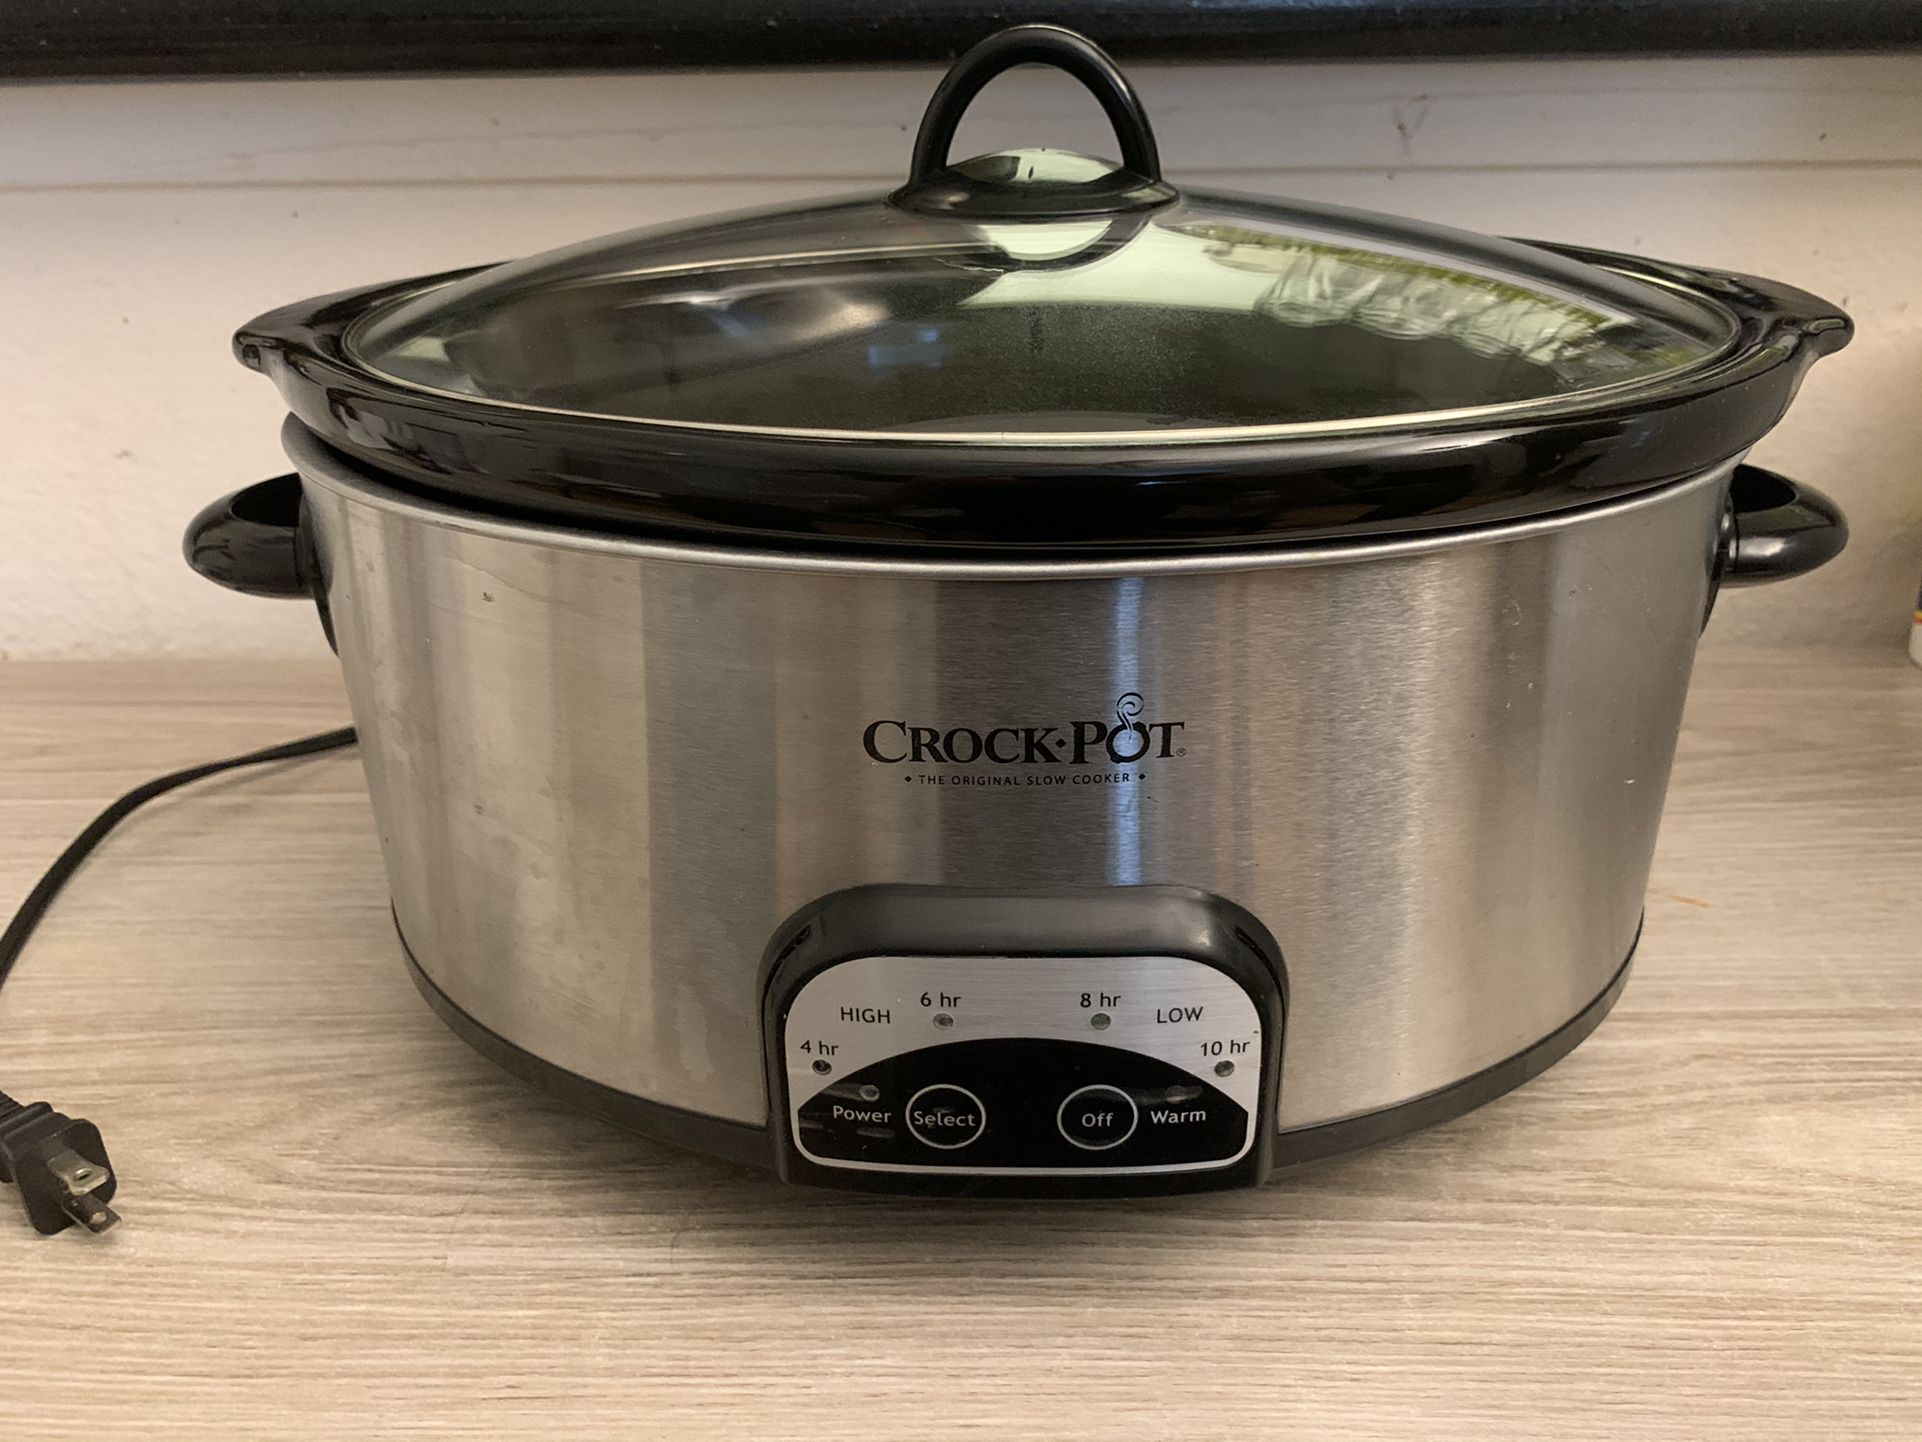 Crockpot Large Slow Cooker for Sale in Fremont, CA - OfferUp